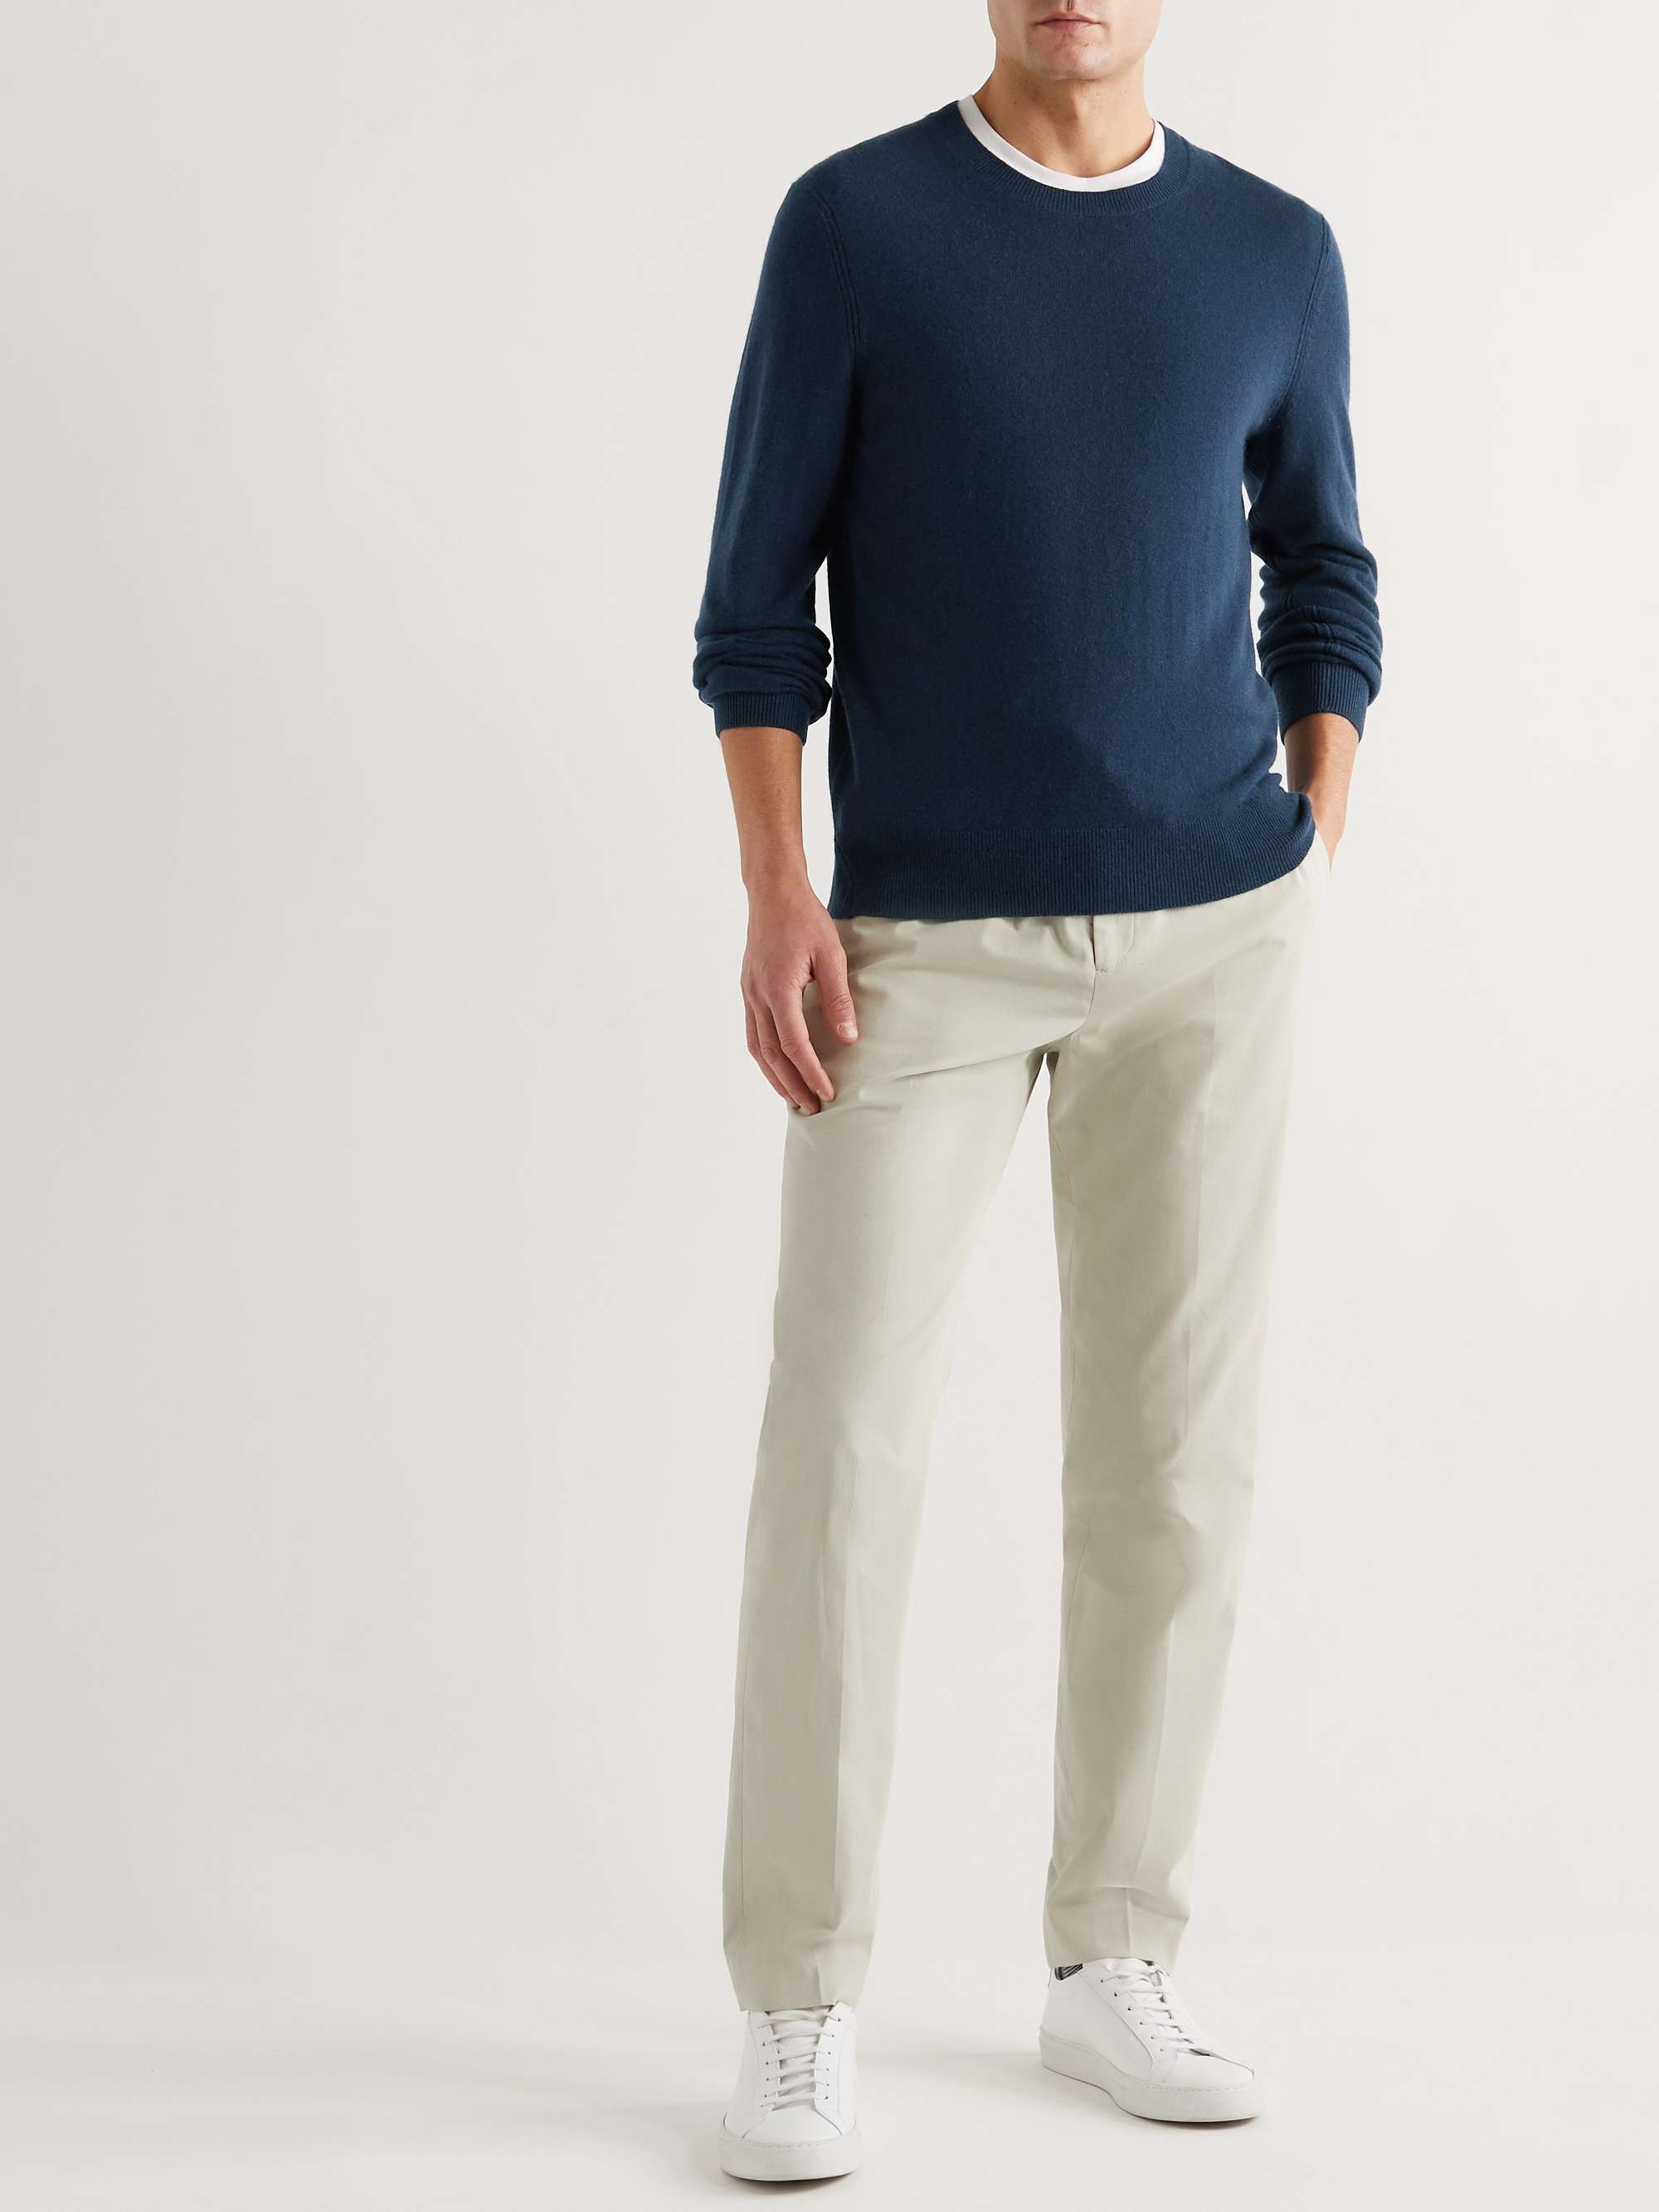 CLUB MONACO Slim-Fit Cashmere Sweater